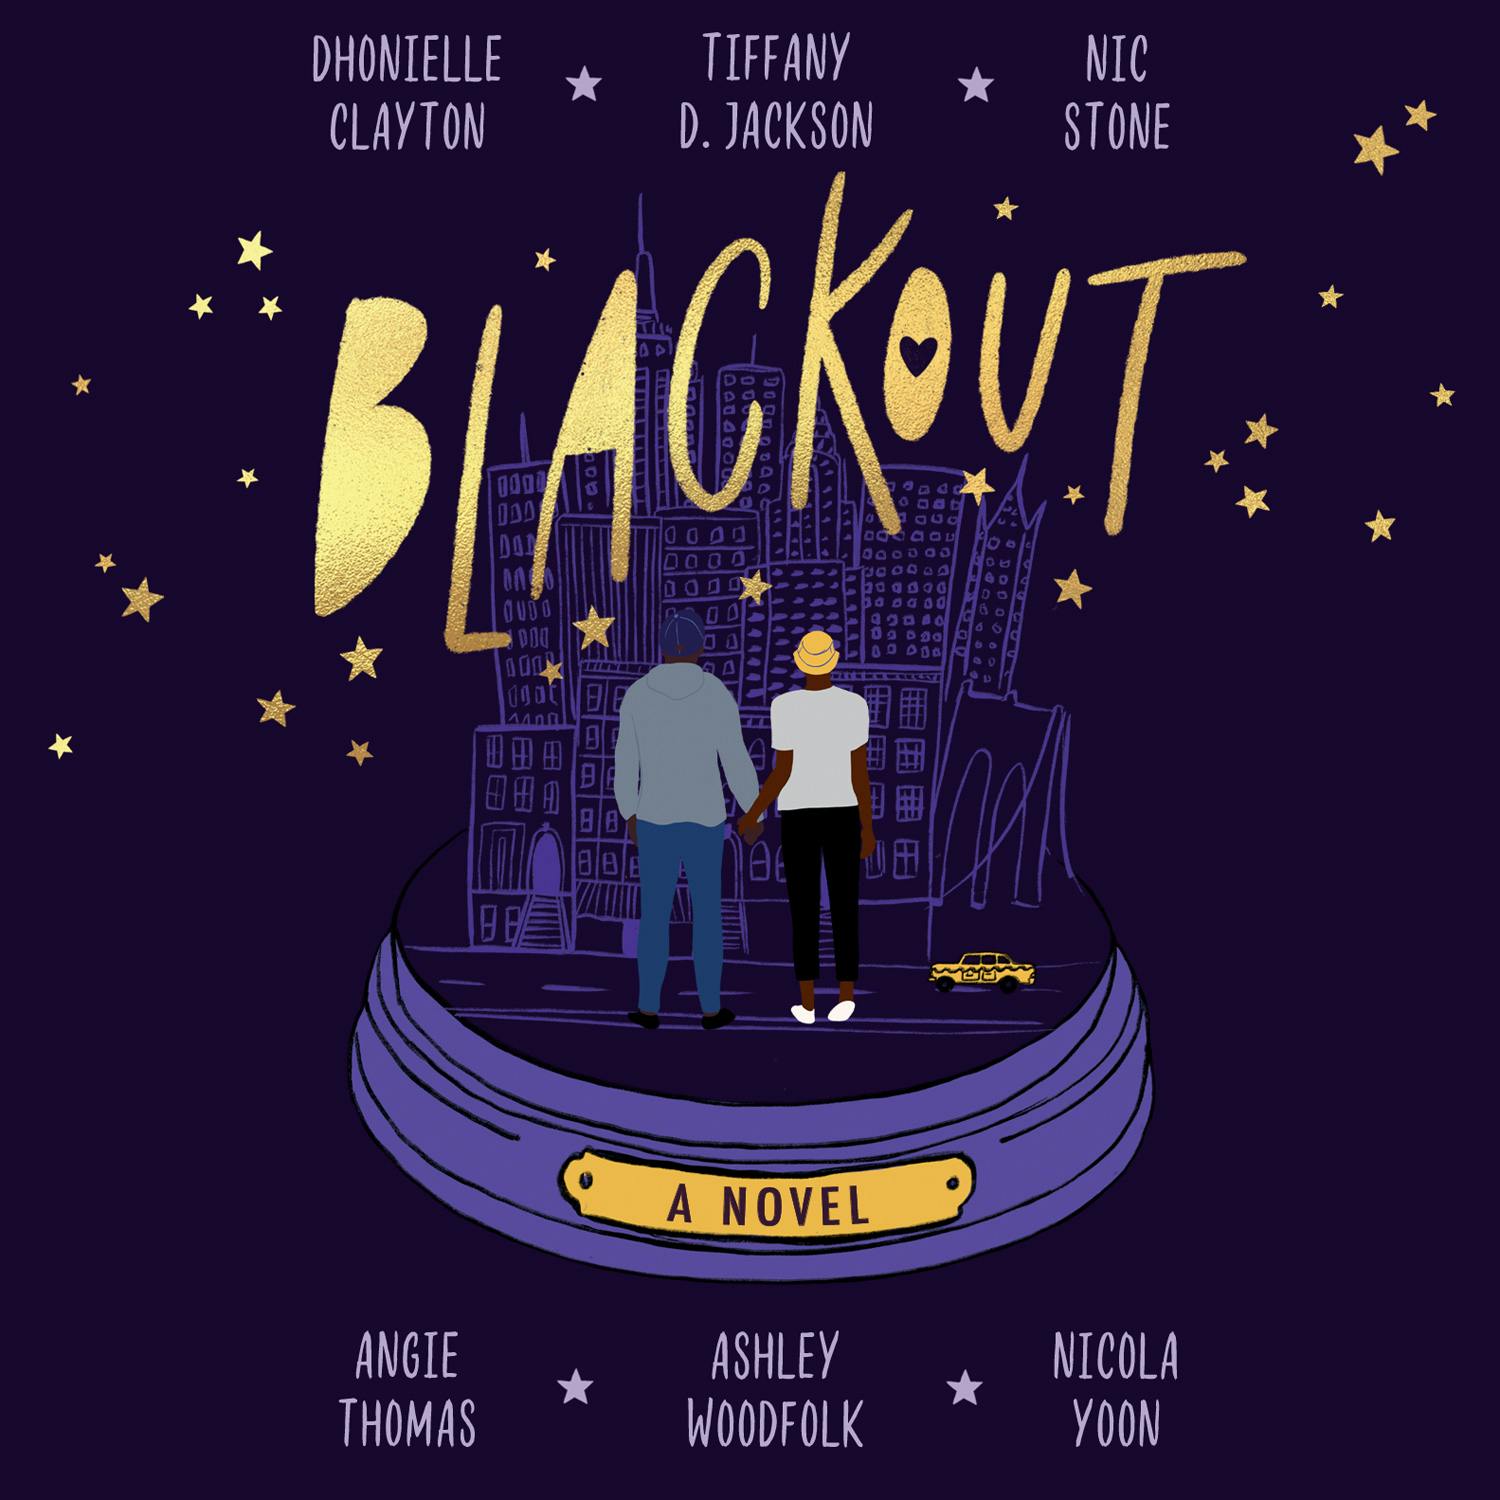 Blackout - undefined